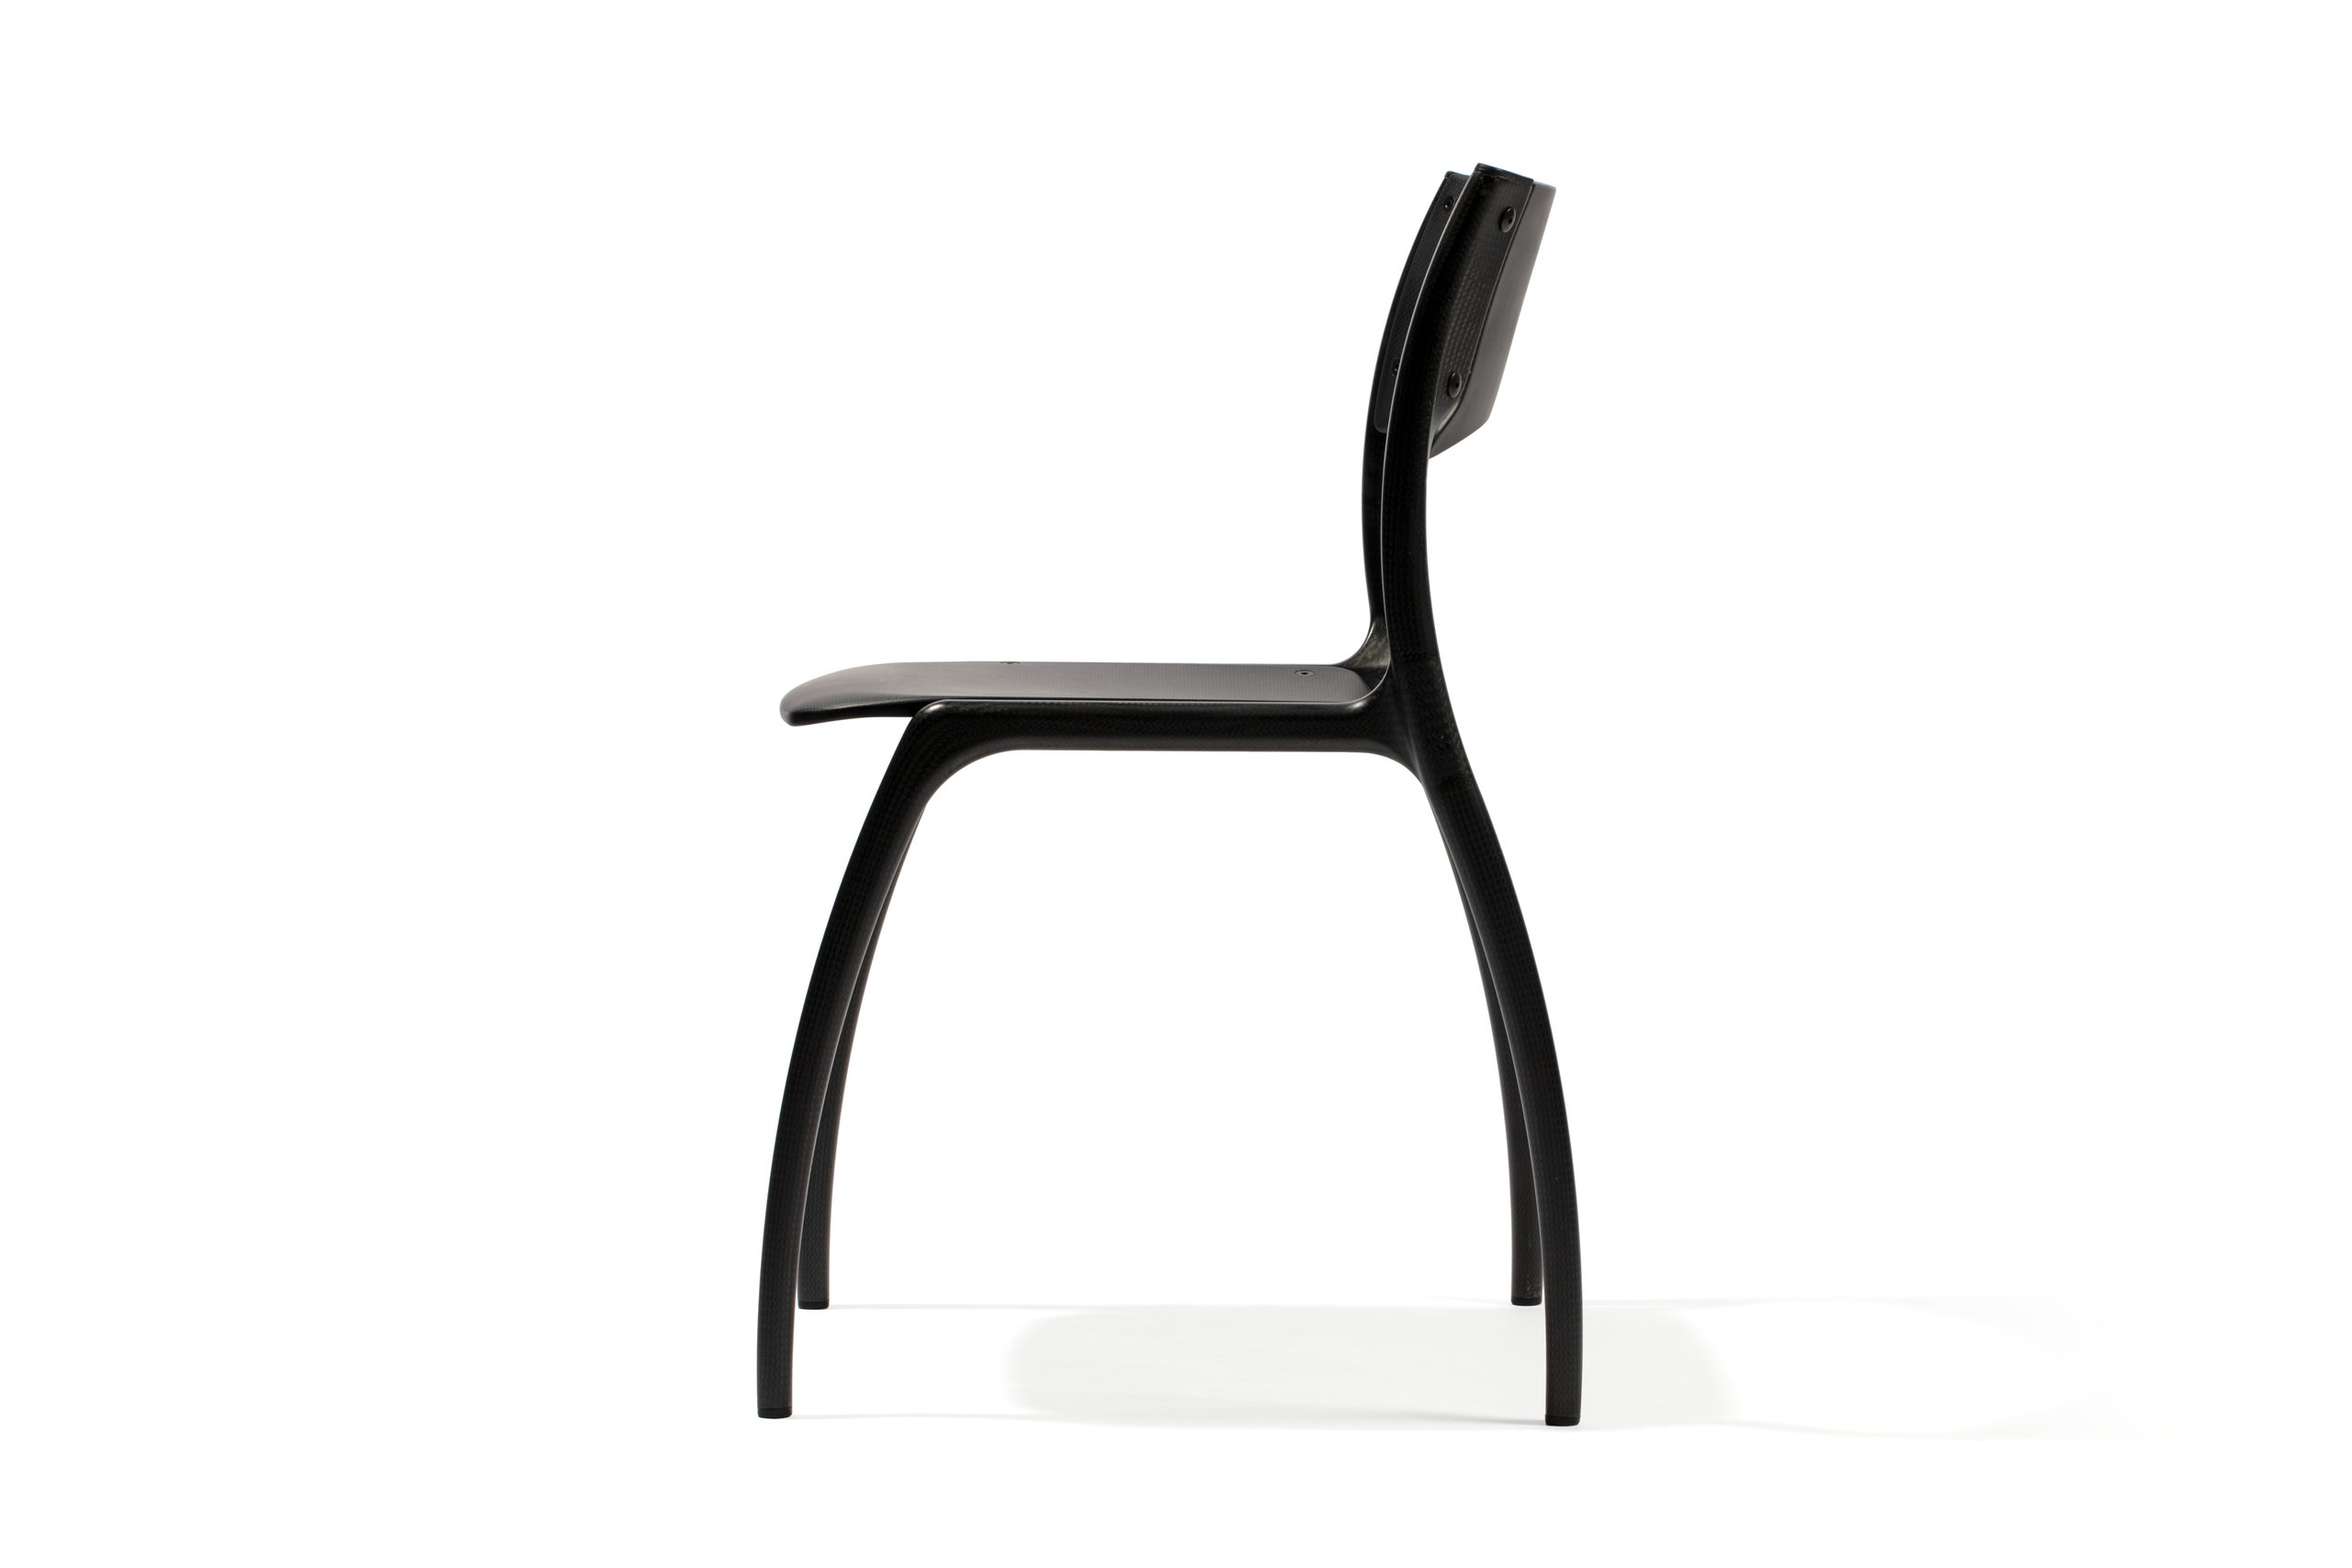 'Talon chair' by Bang Design and Talon Technology